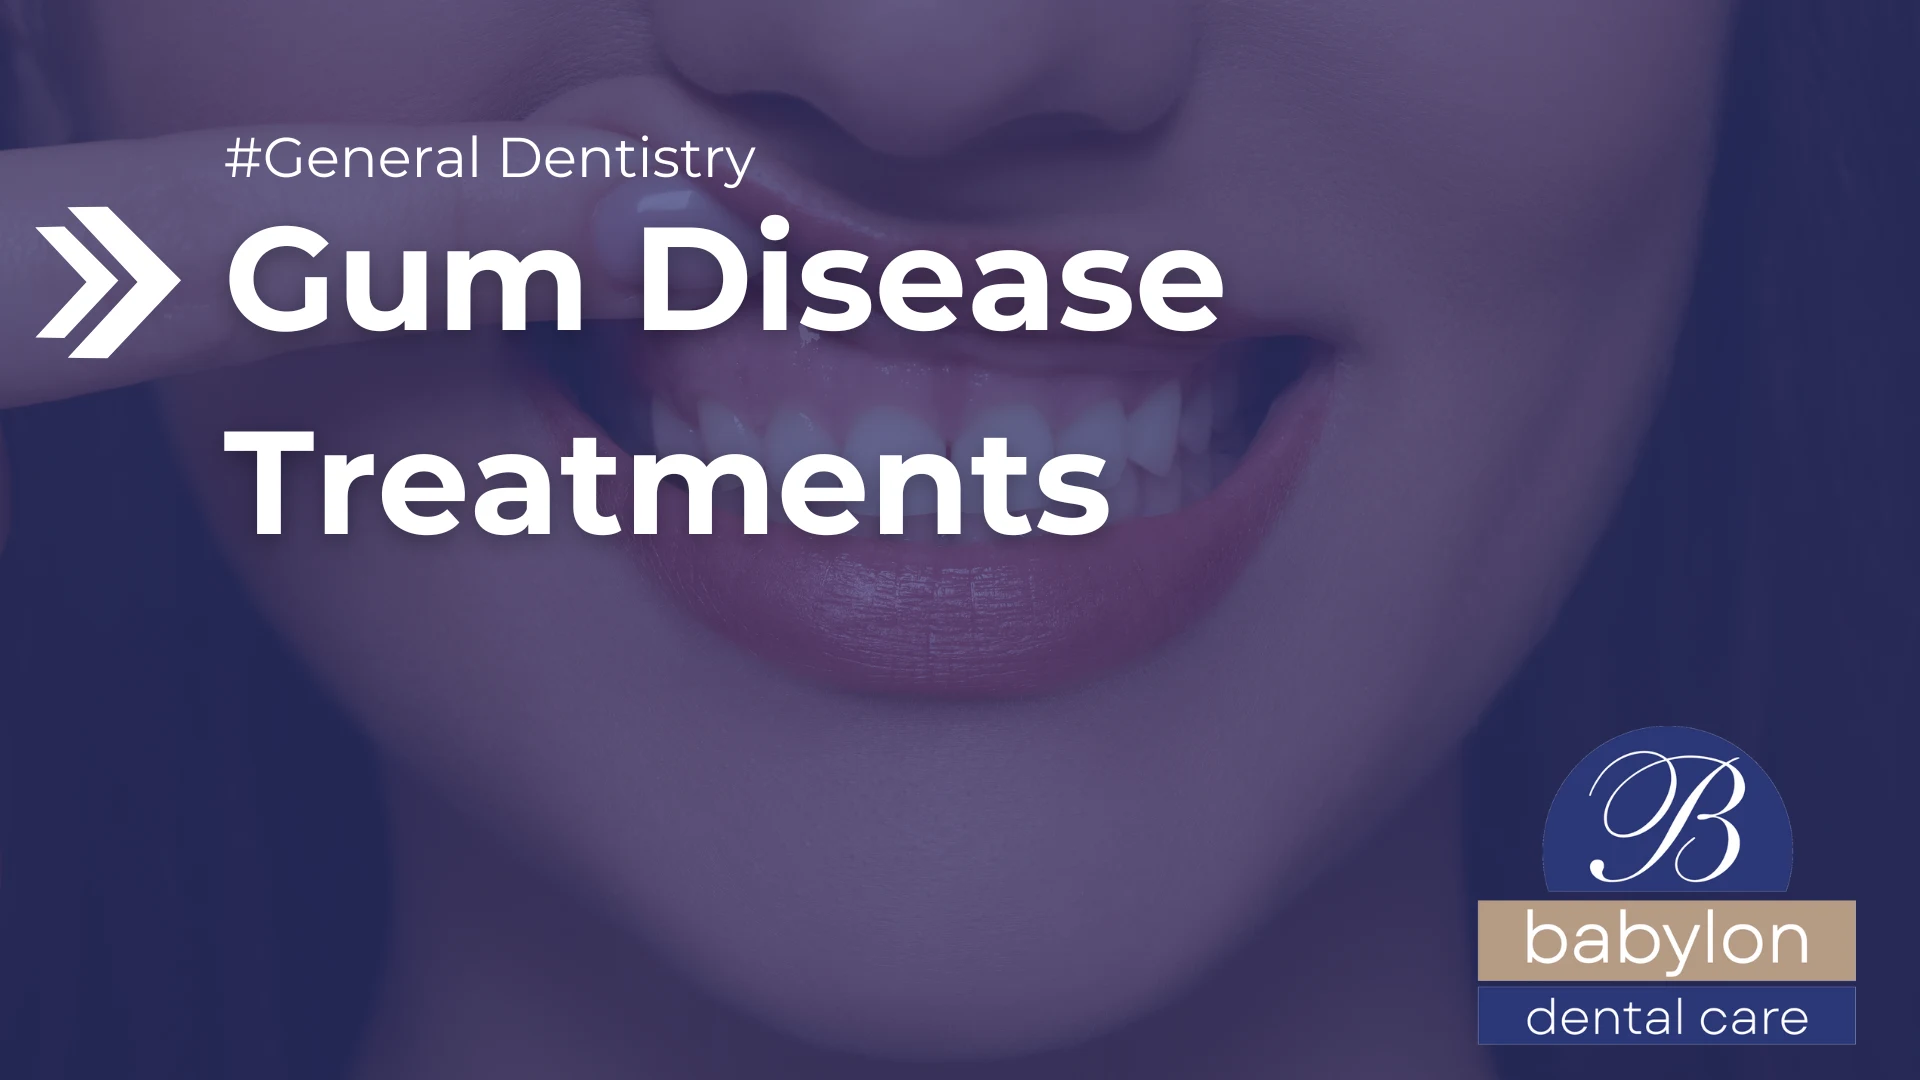 Gum Disease Treatments Image - new logo